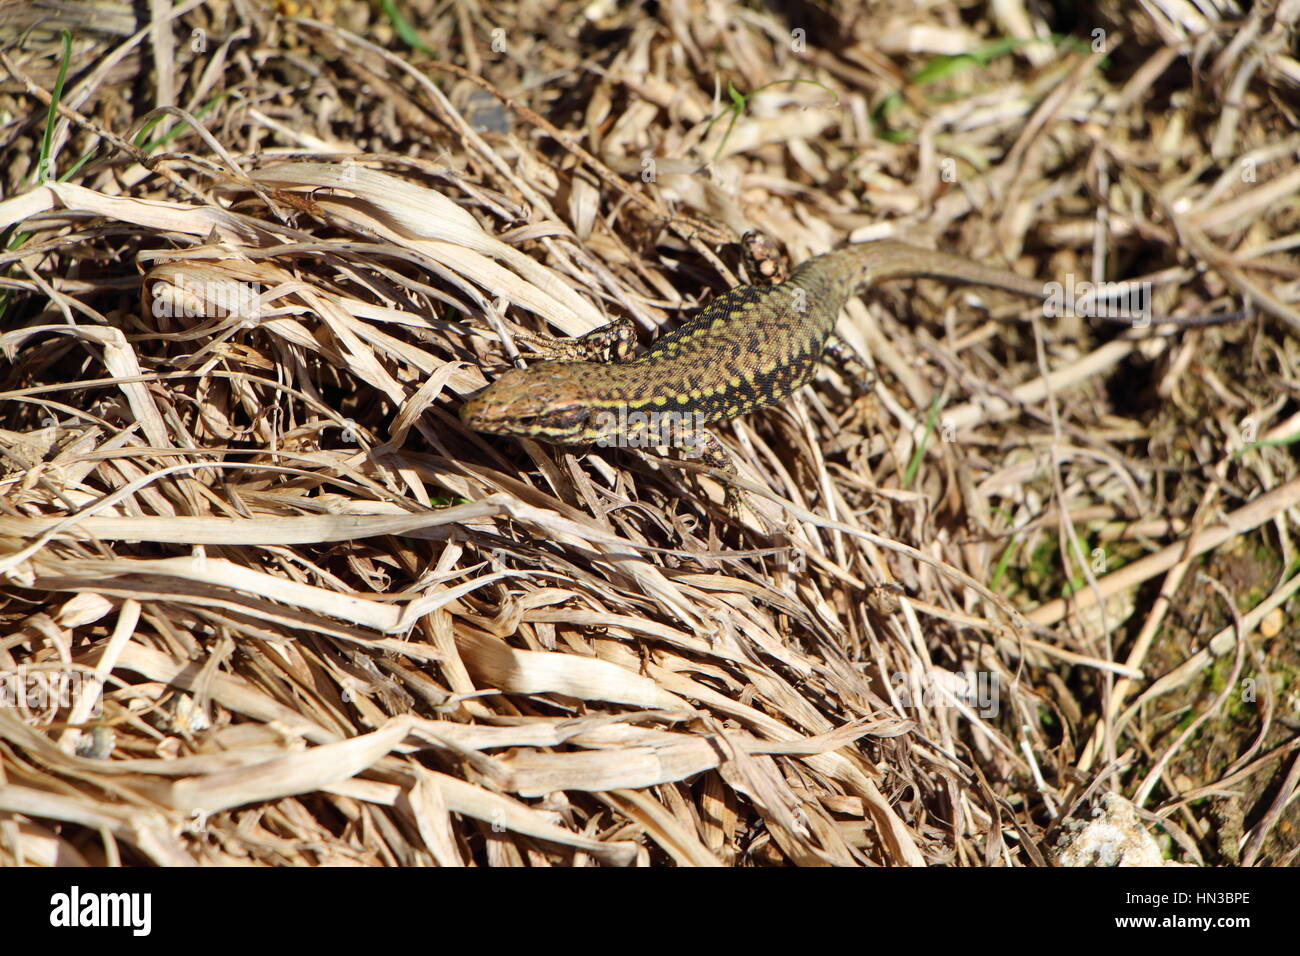 Lizard on dried grass Stock Photo